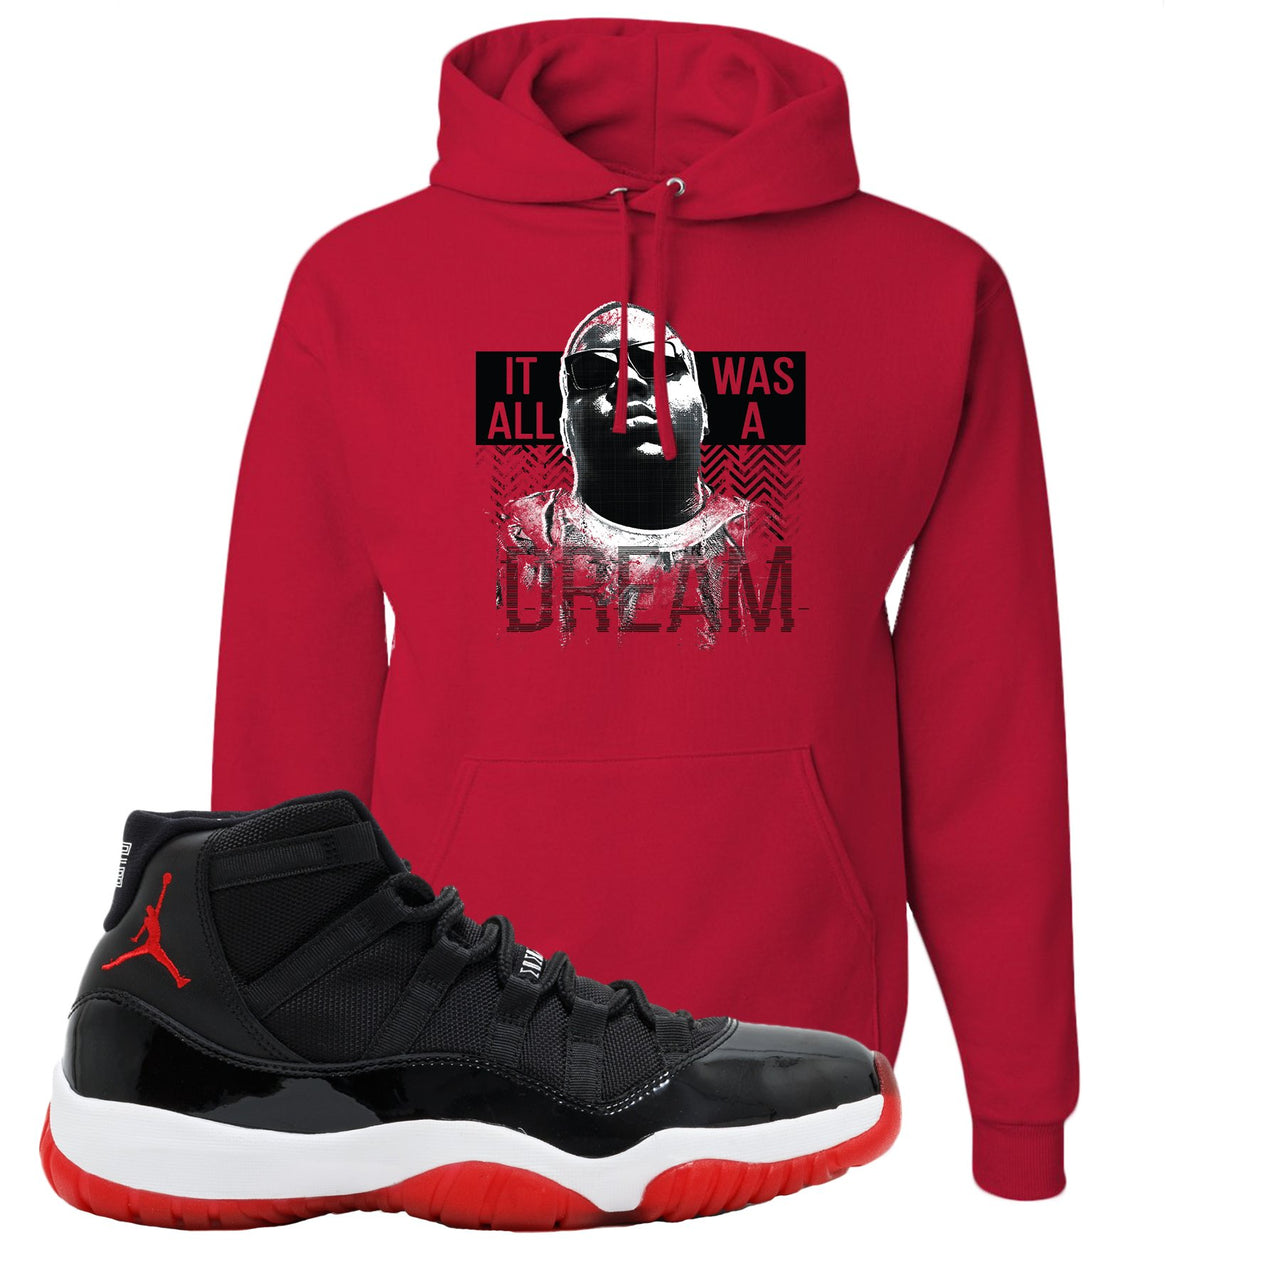 Jordan 11 Bred It Was All A Dream Red Sneaker Hook Up Pullover Hoodie